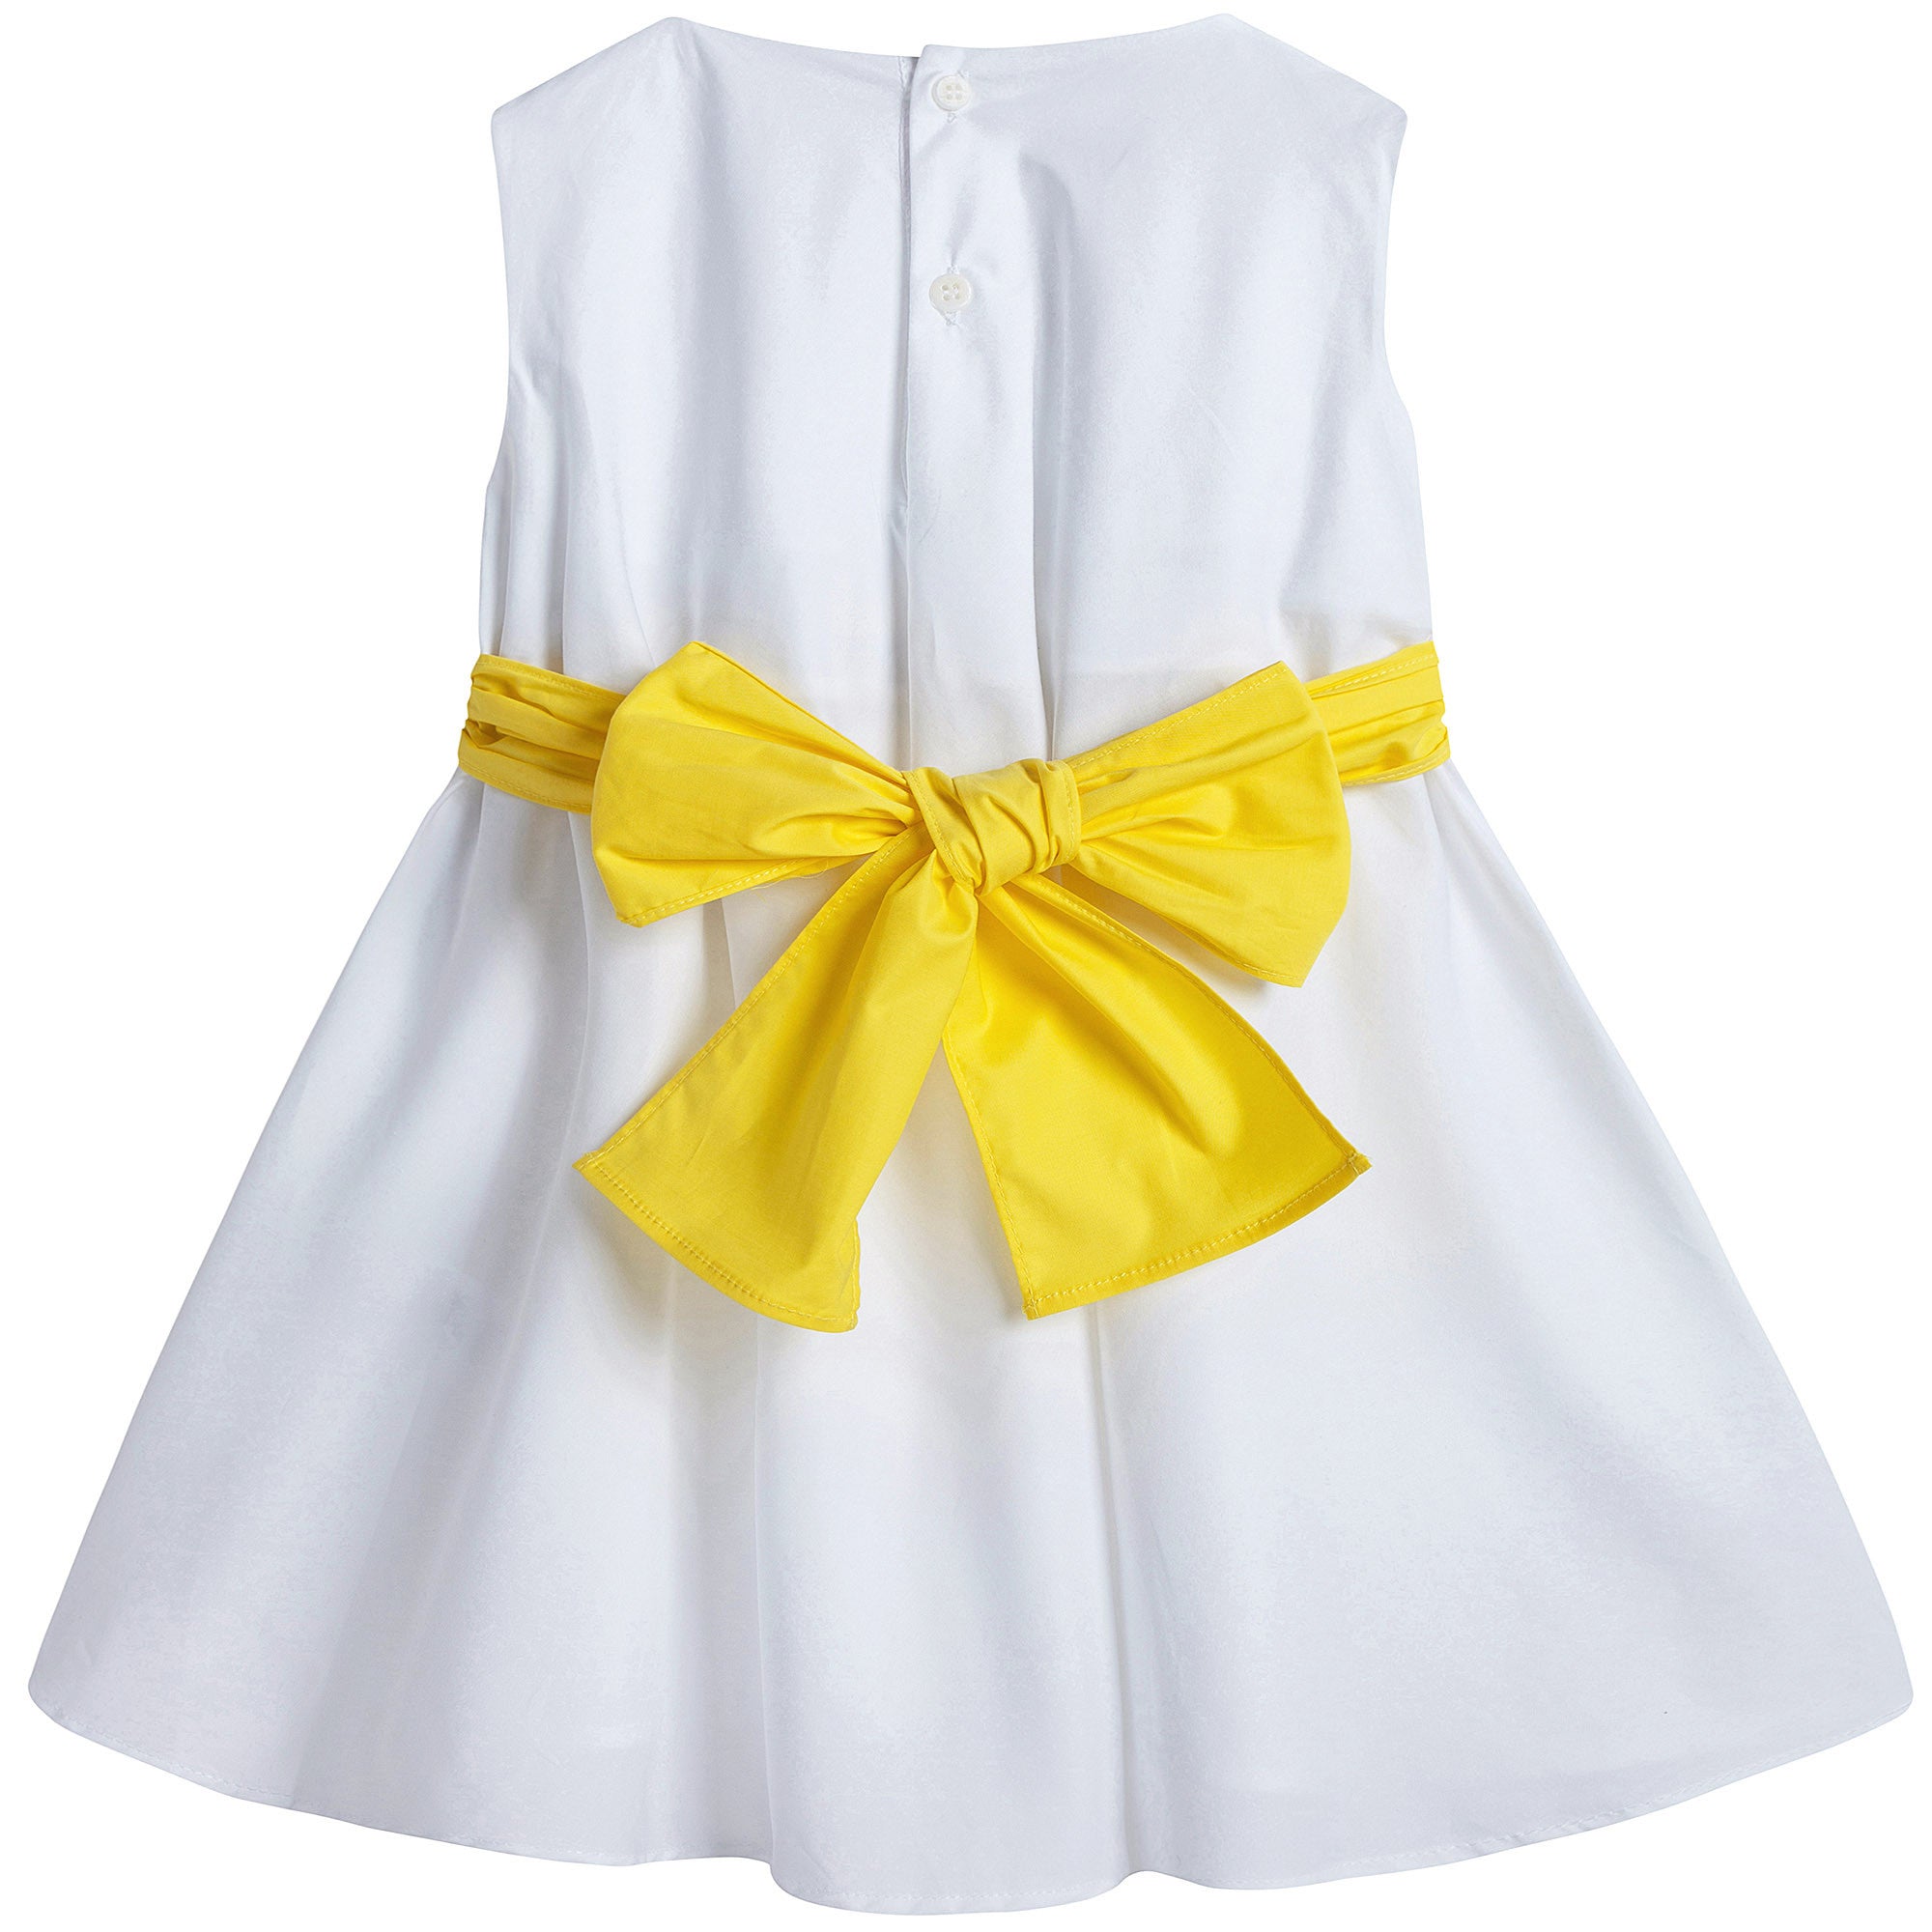 Girls White Dress With Black Bow - CÉMAROSE | Children's Fashion Store - 2